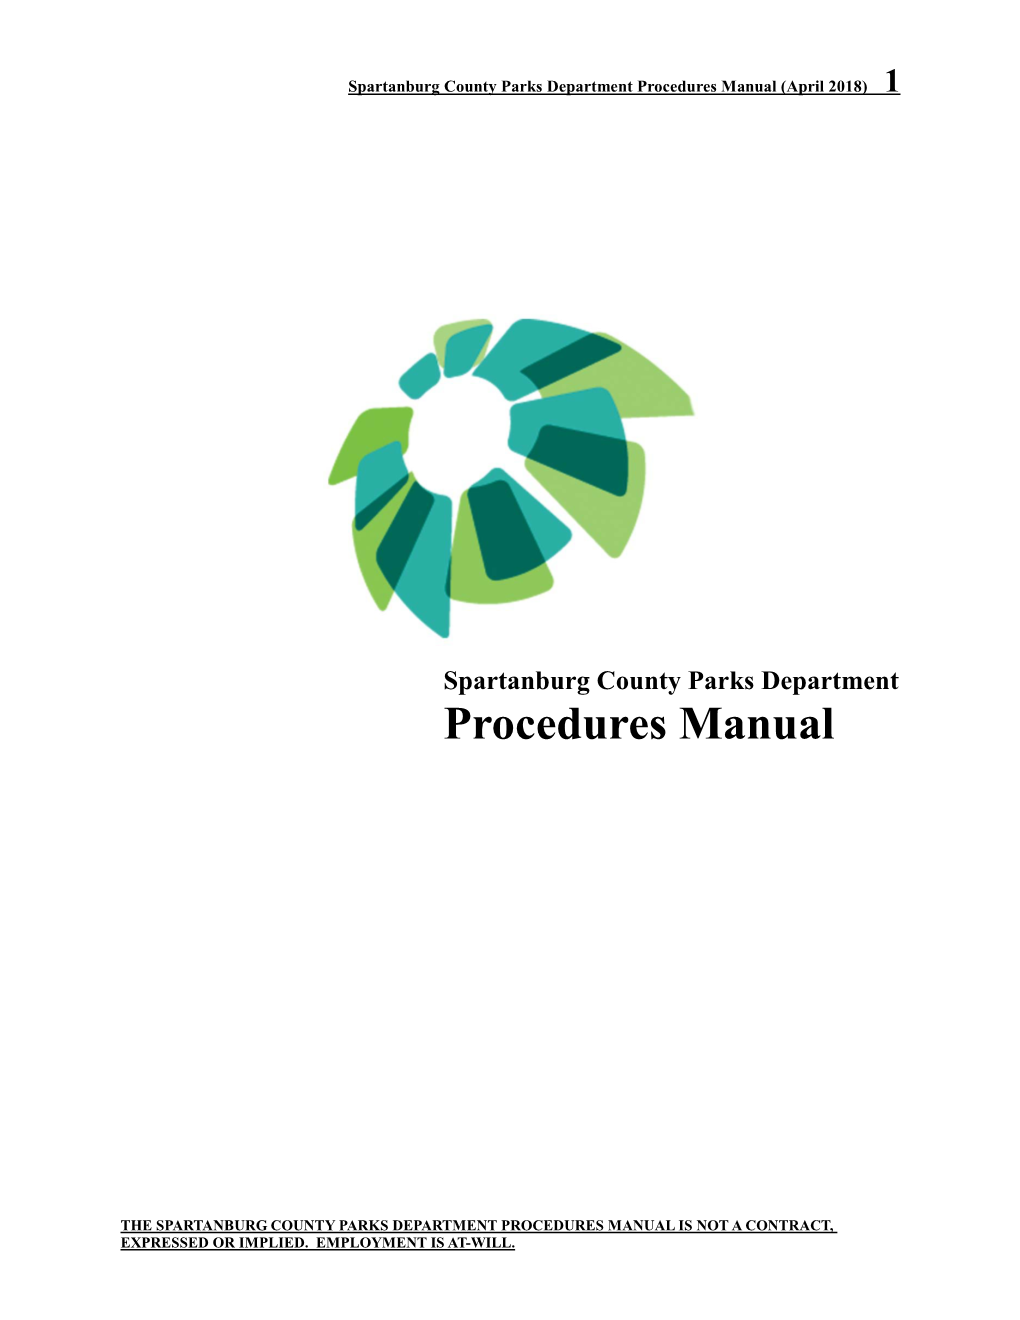 Procedures Manual (April 2018) 1